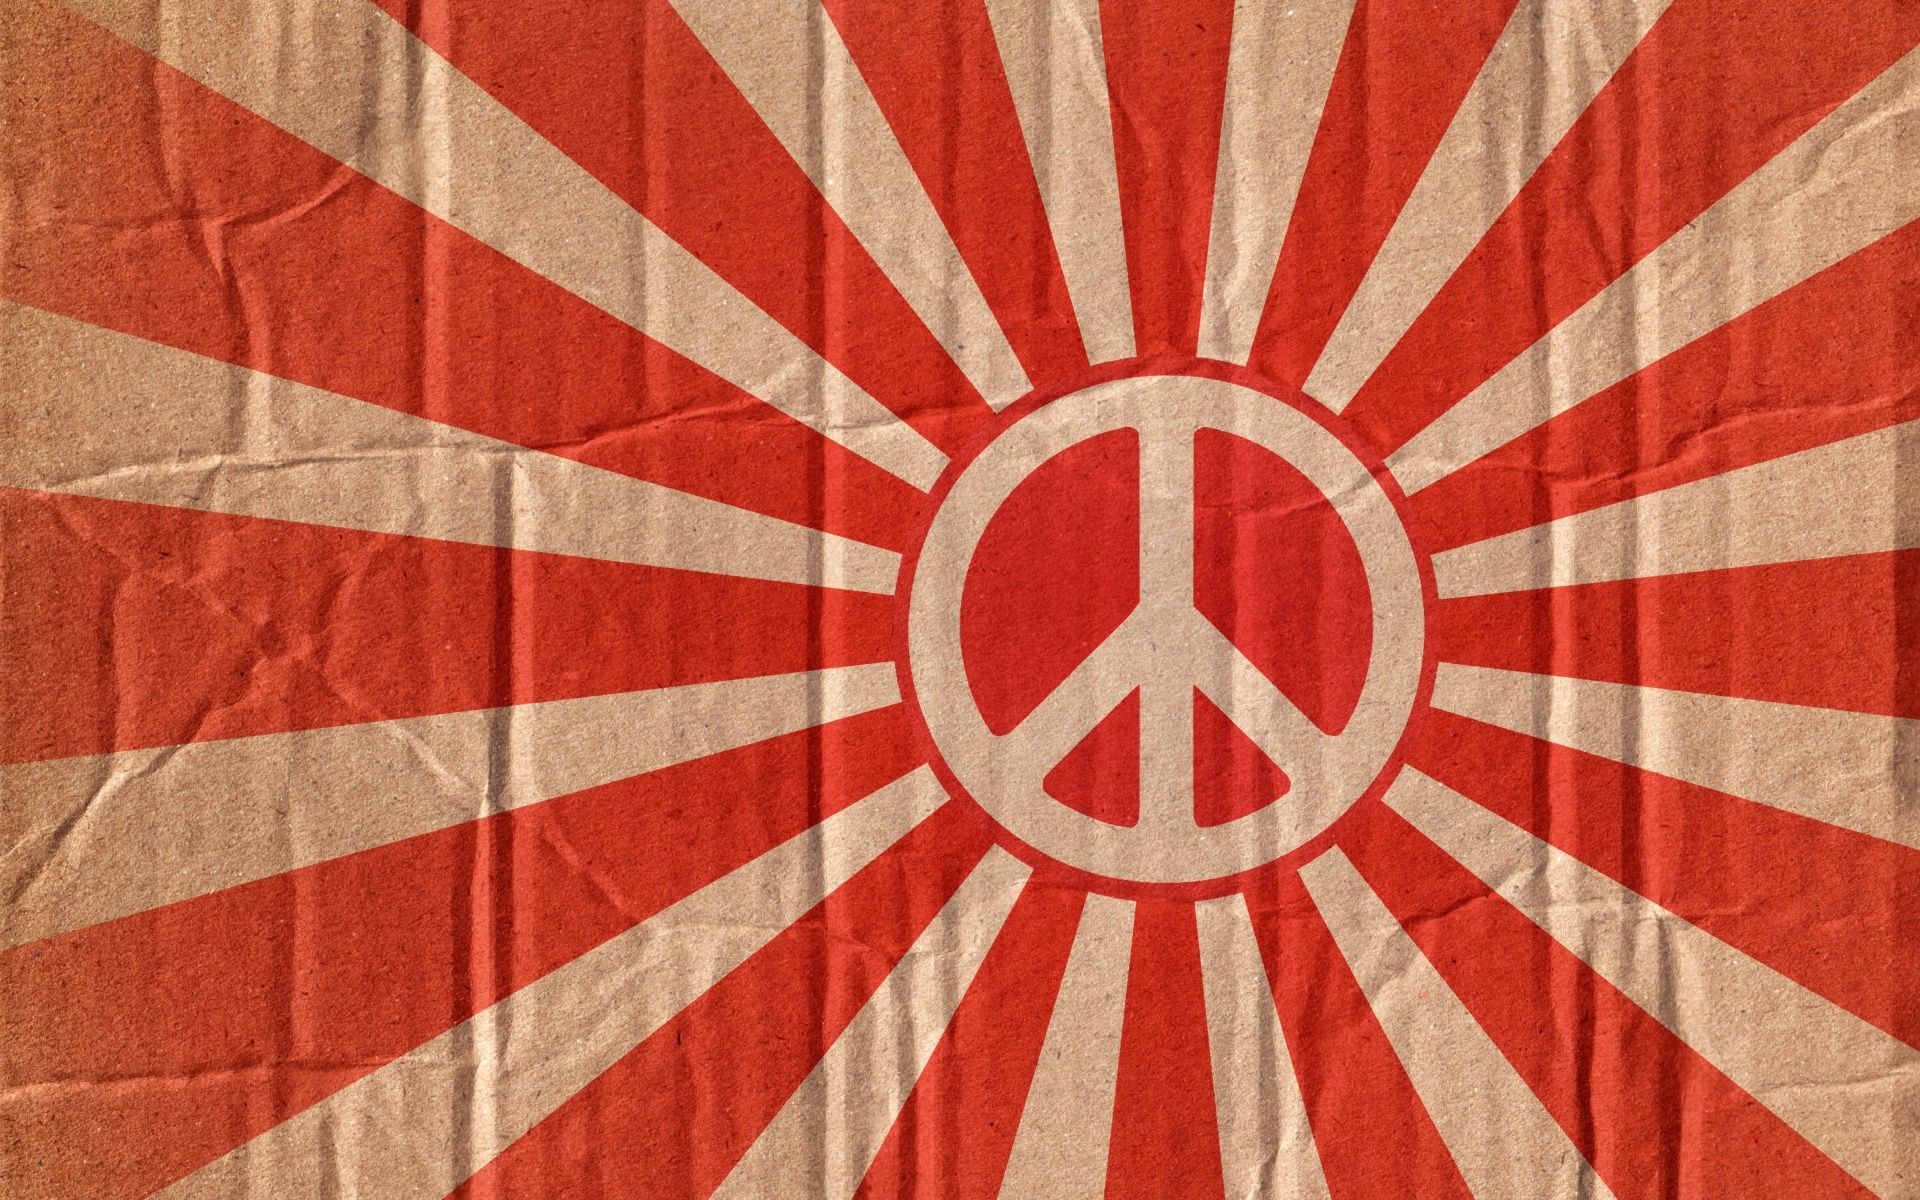 Peace Wallpaper Free Download. Peace sign image, Peace, Peace